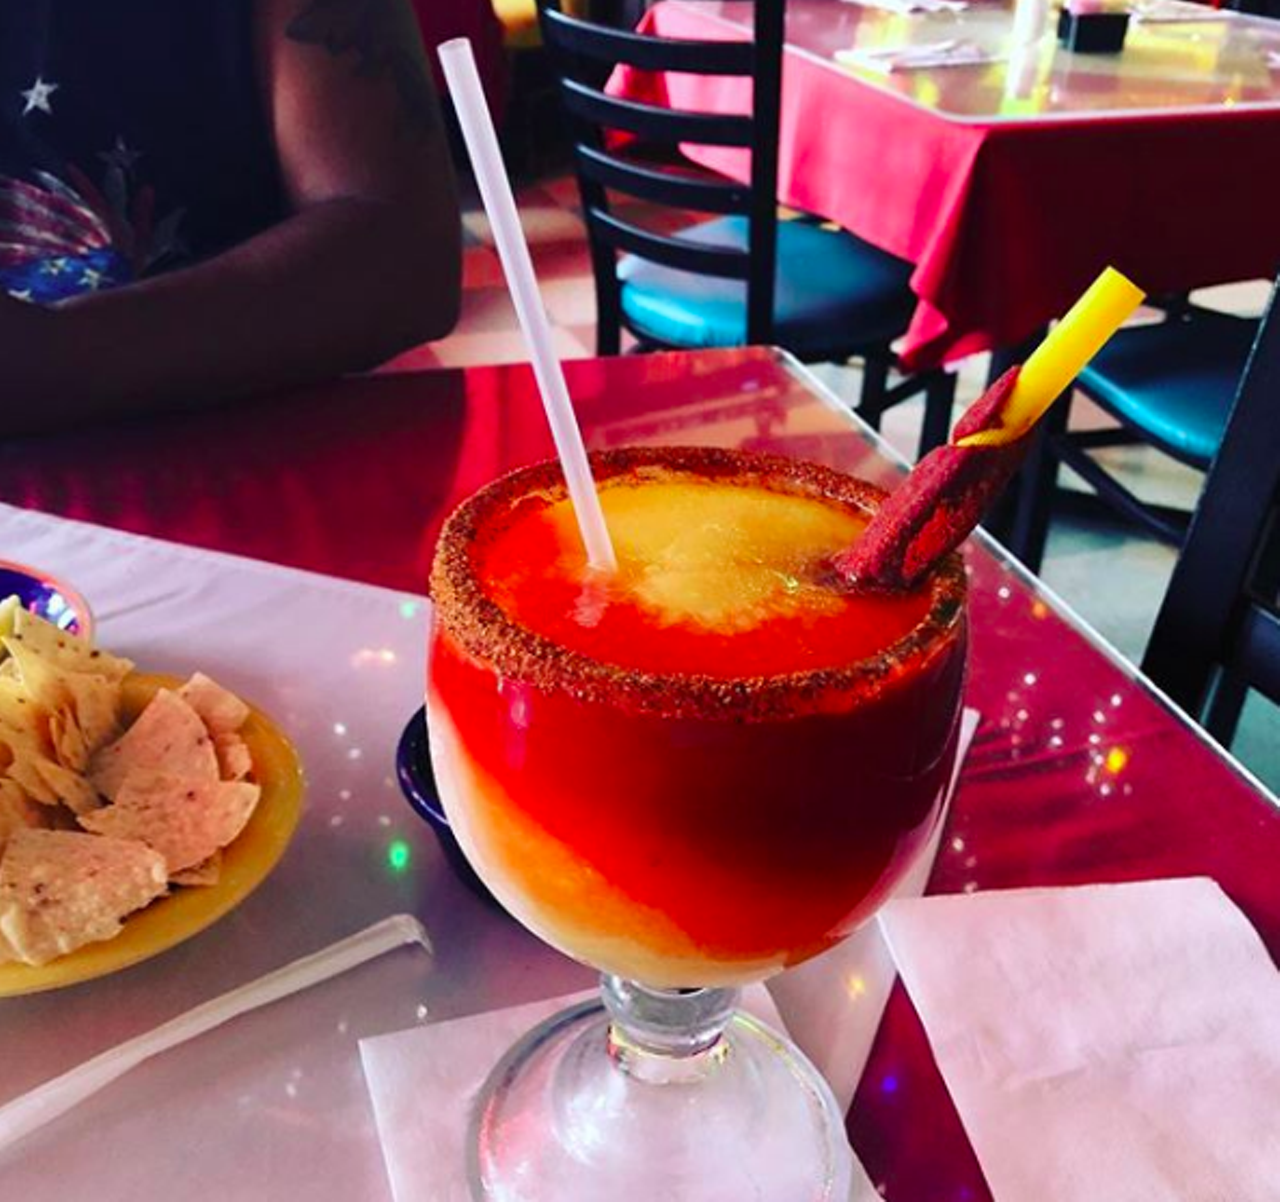 Best Micheladas
Pico De Gallo Restaurant, 111 S. Leona St., San Antonio, (210) 225-6060, picodegallo.com
Photo via Instagram / akmexi33